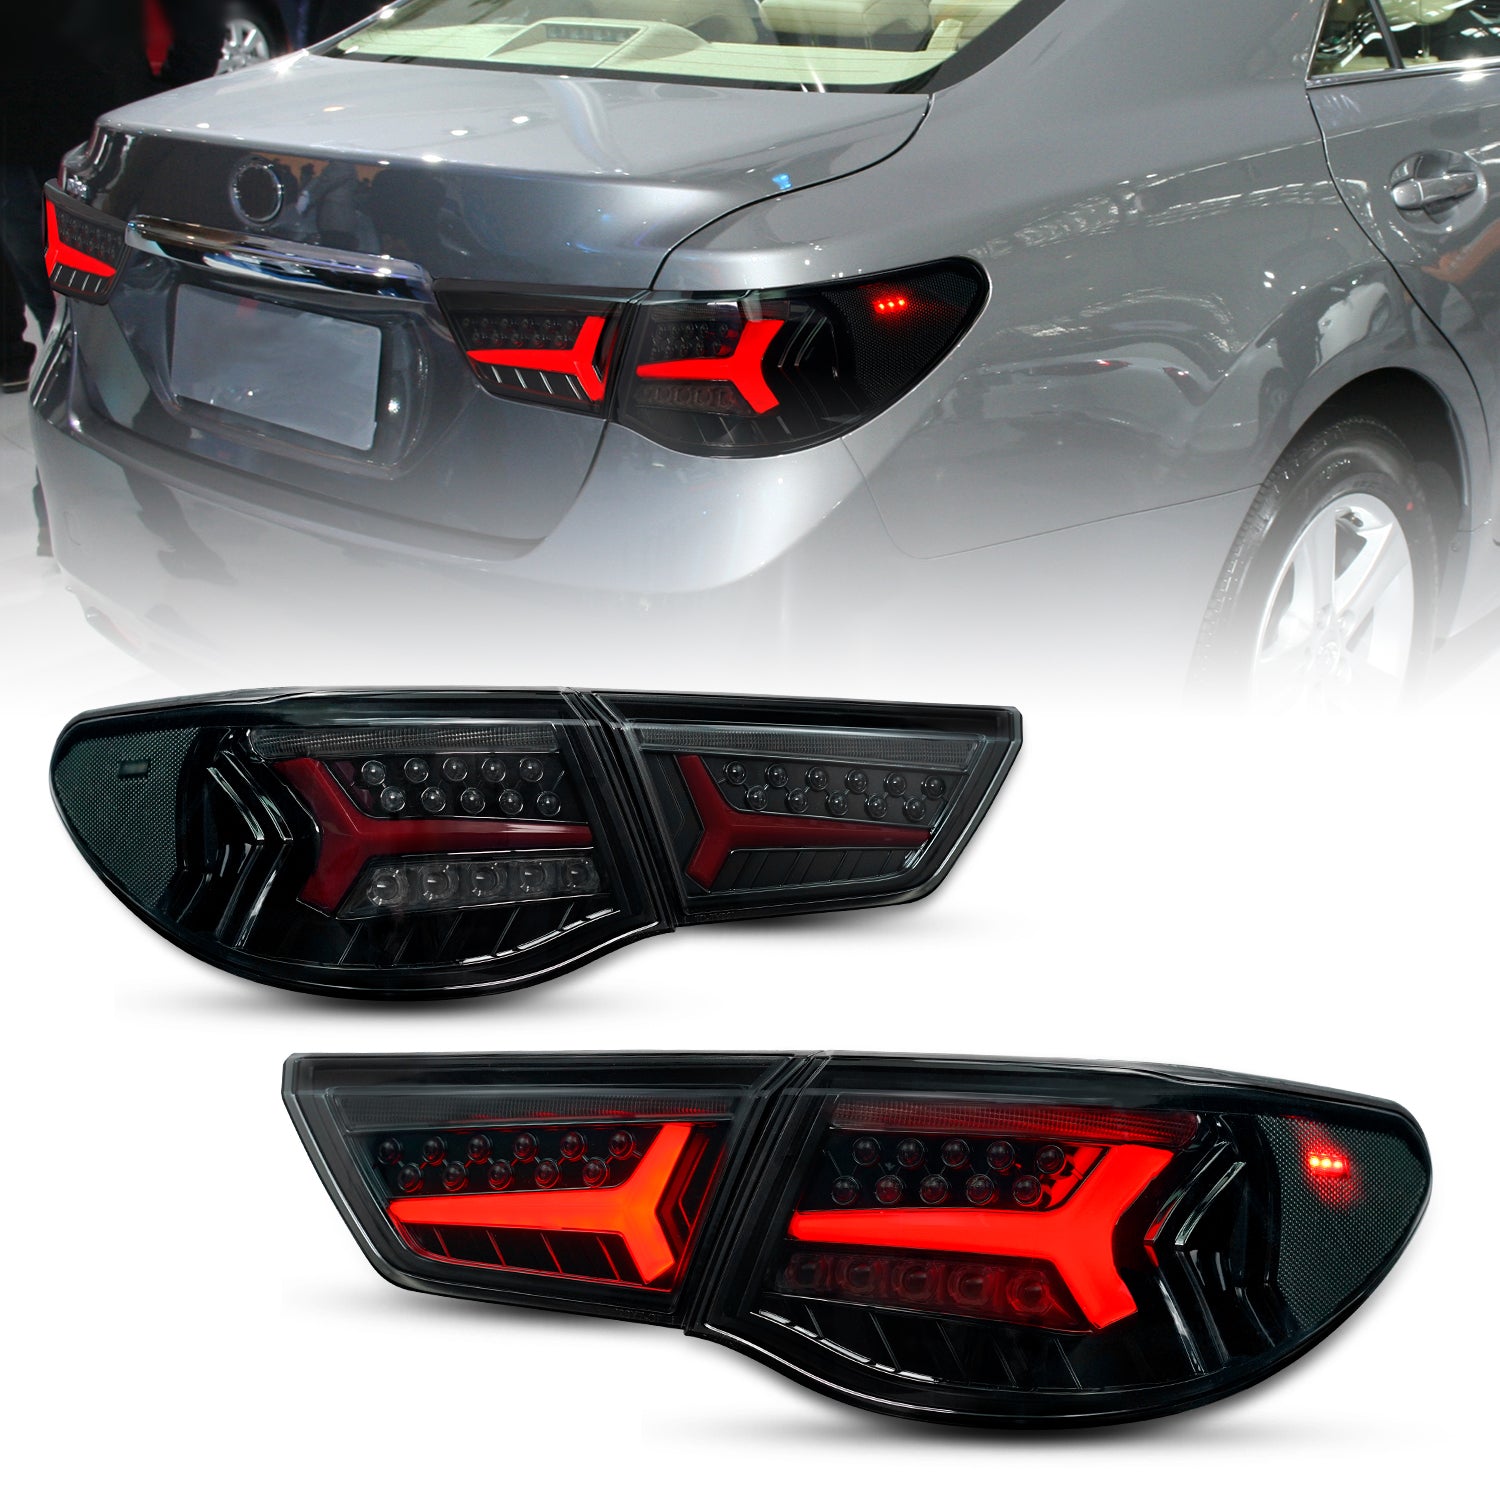 Archaic LED Car Lights  Tail Lights Assembly For Toyota Reiz/Mark X